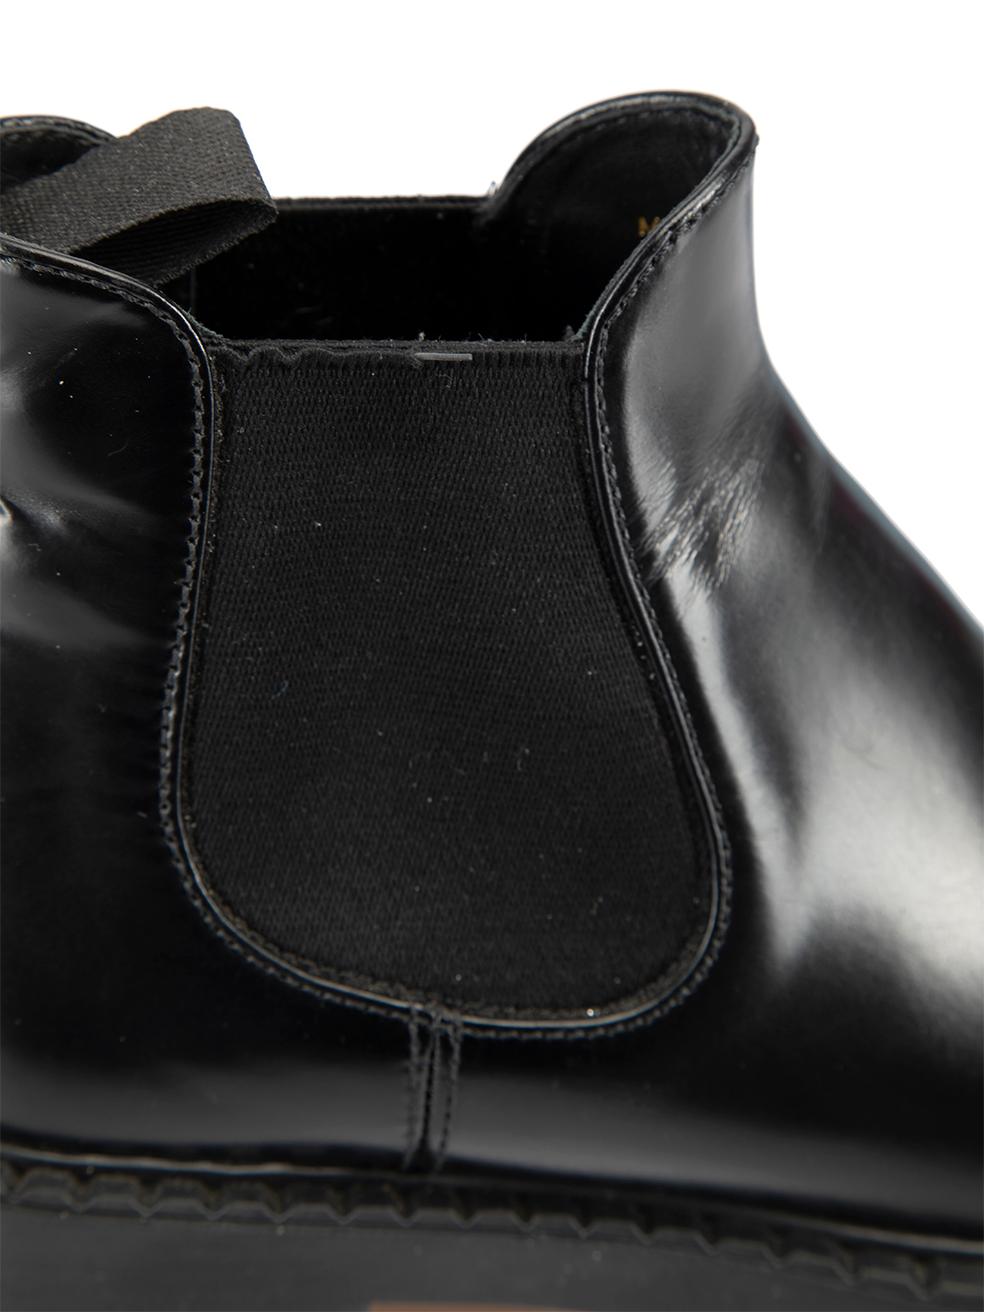 Prada Women's Black Leather Round Toe Chelsea Boots 2